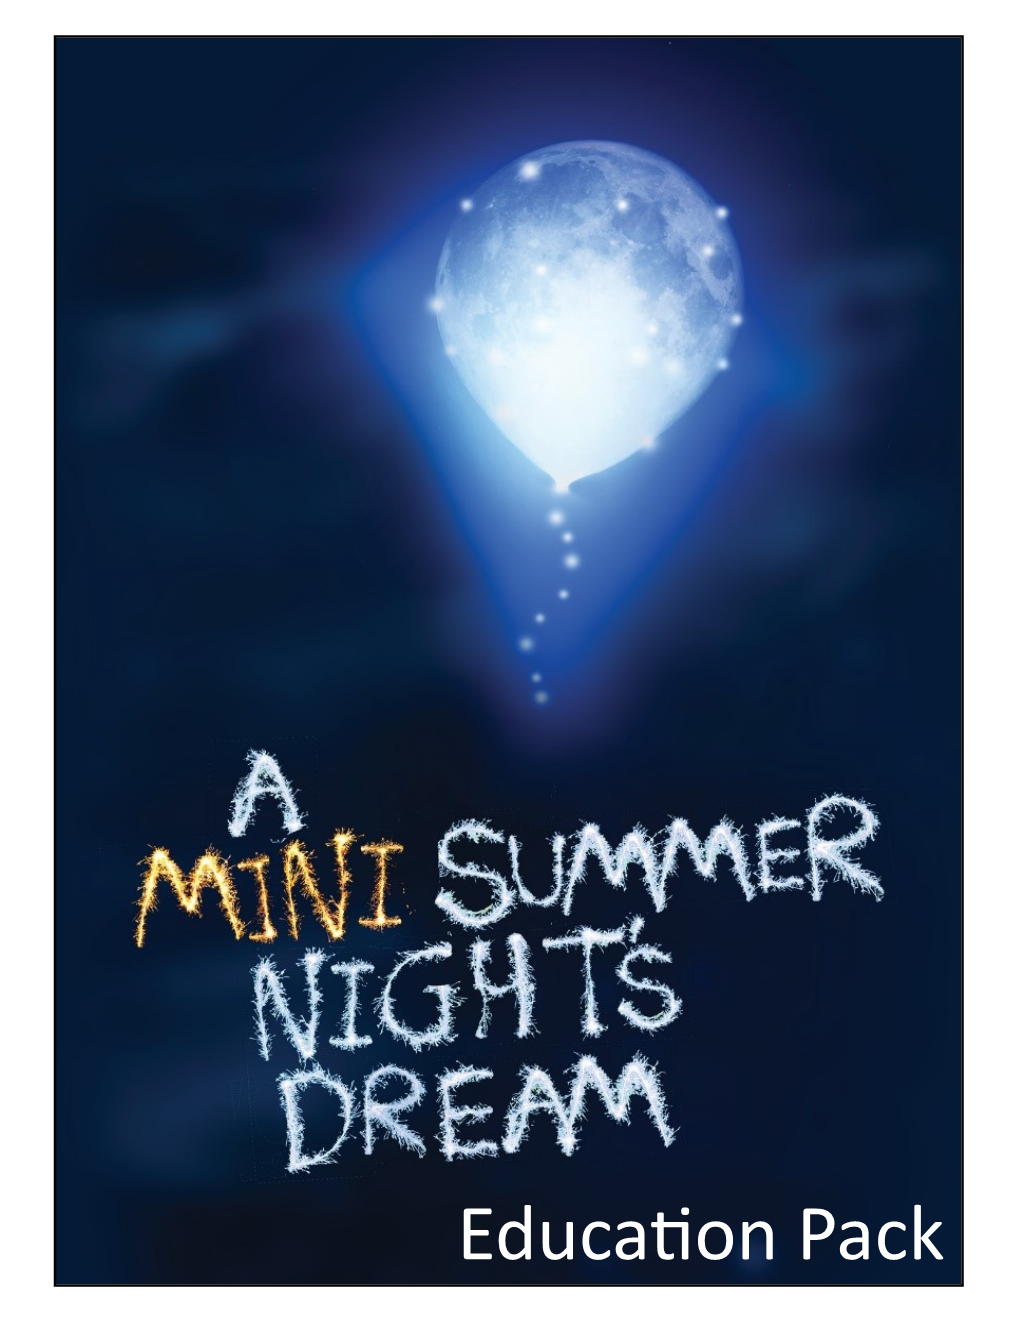 A Midsummer Night's Dream WHOOSH!